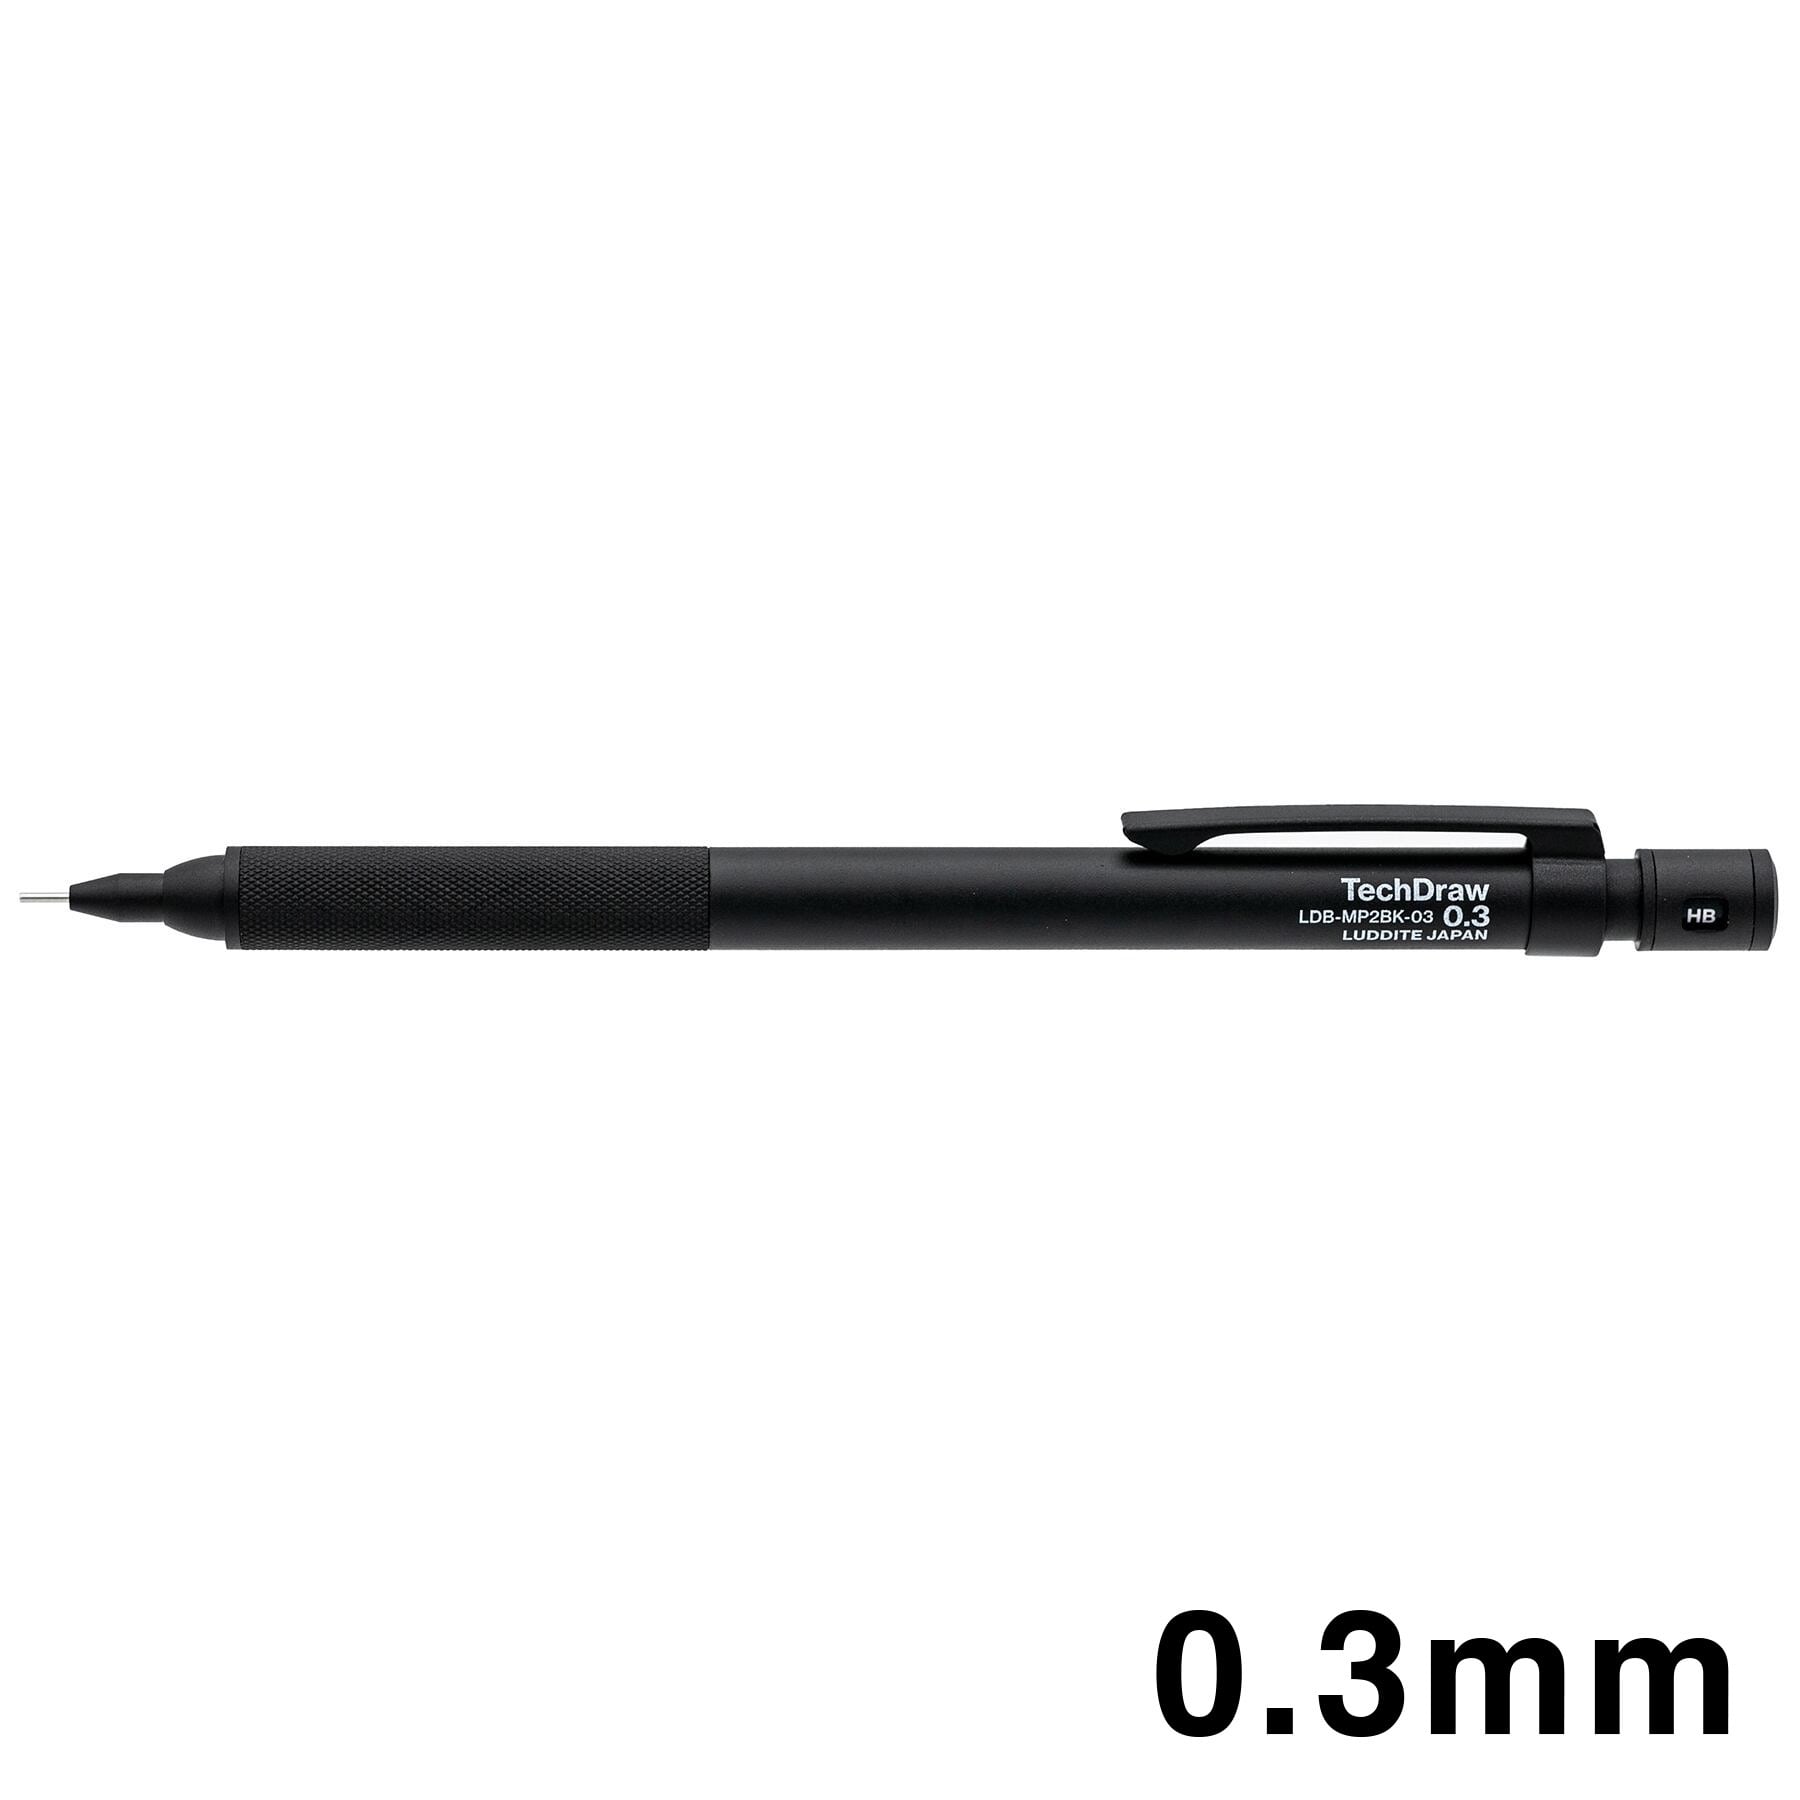 Bic Soft FeelClic Grip Ballpoint Pen Black Snap Medium Tip MM. 1